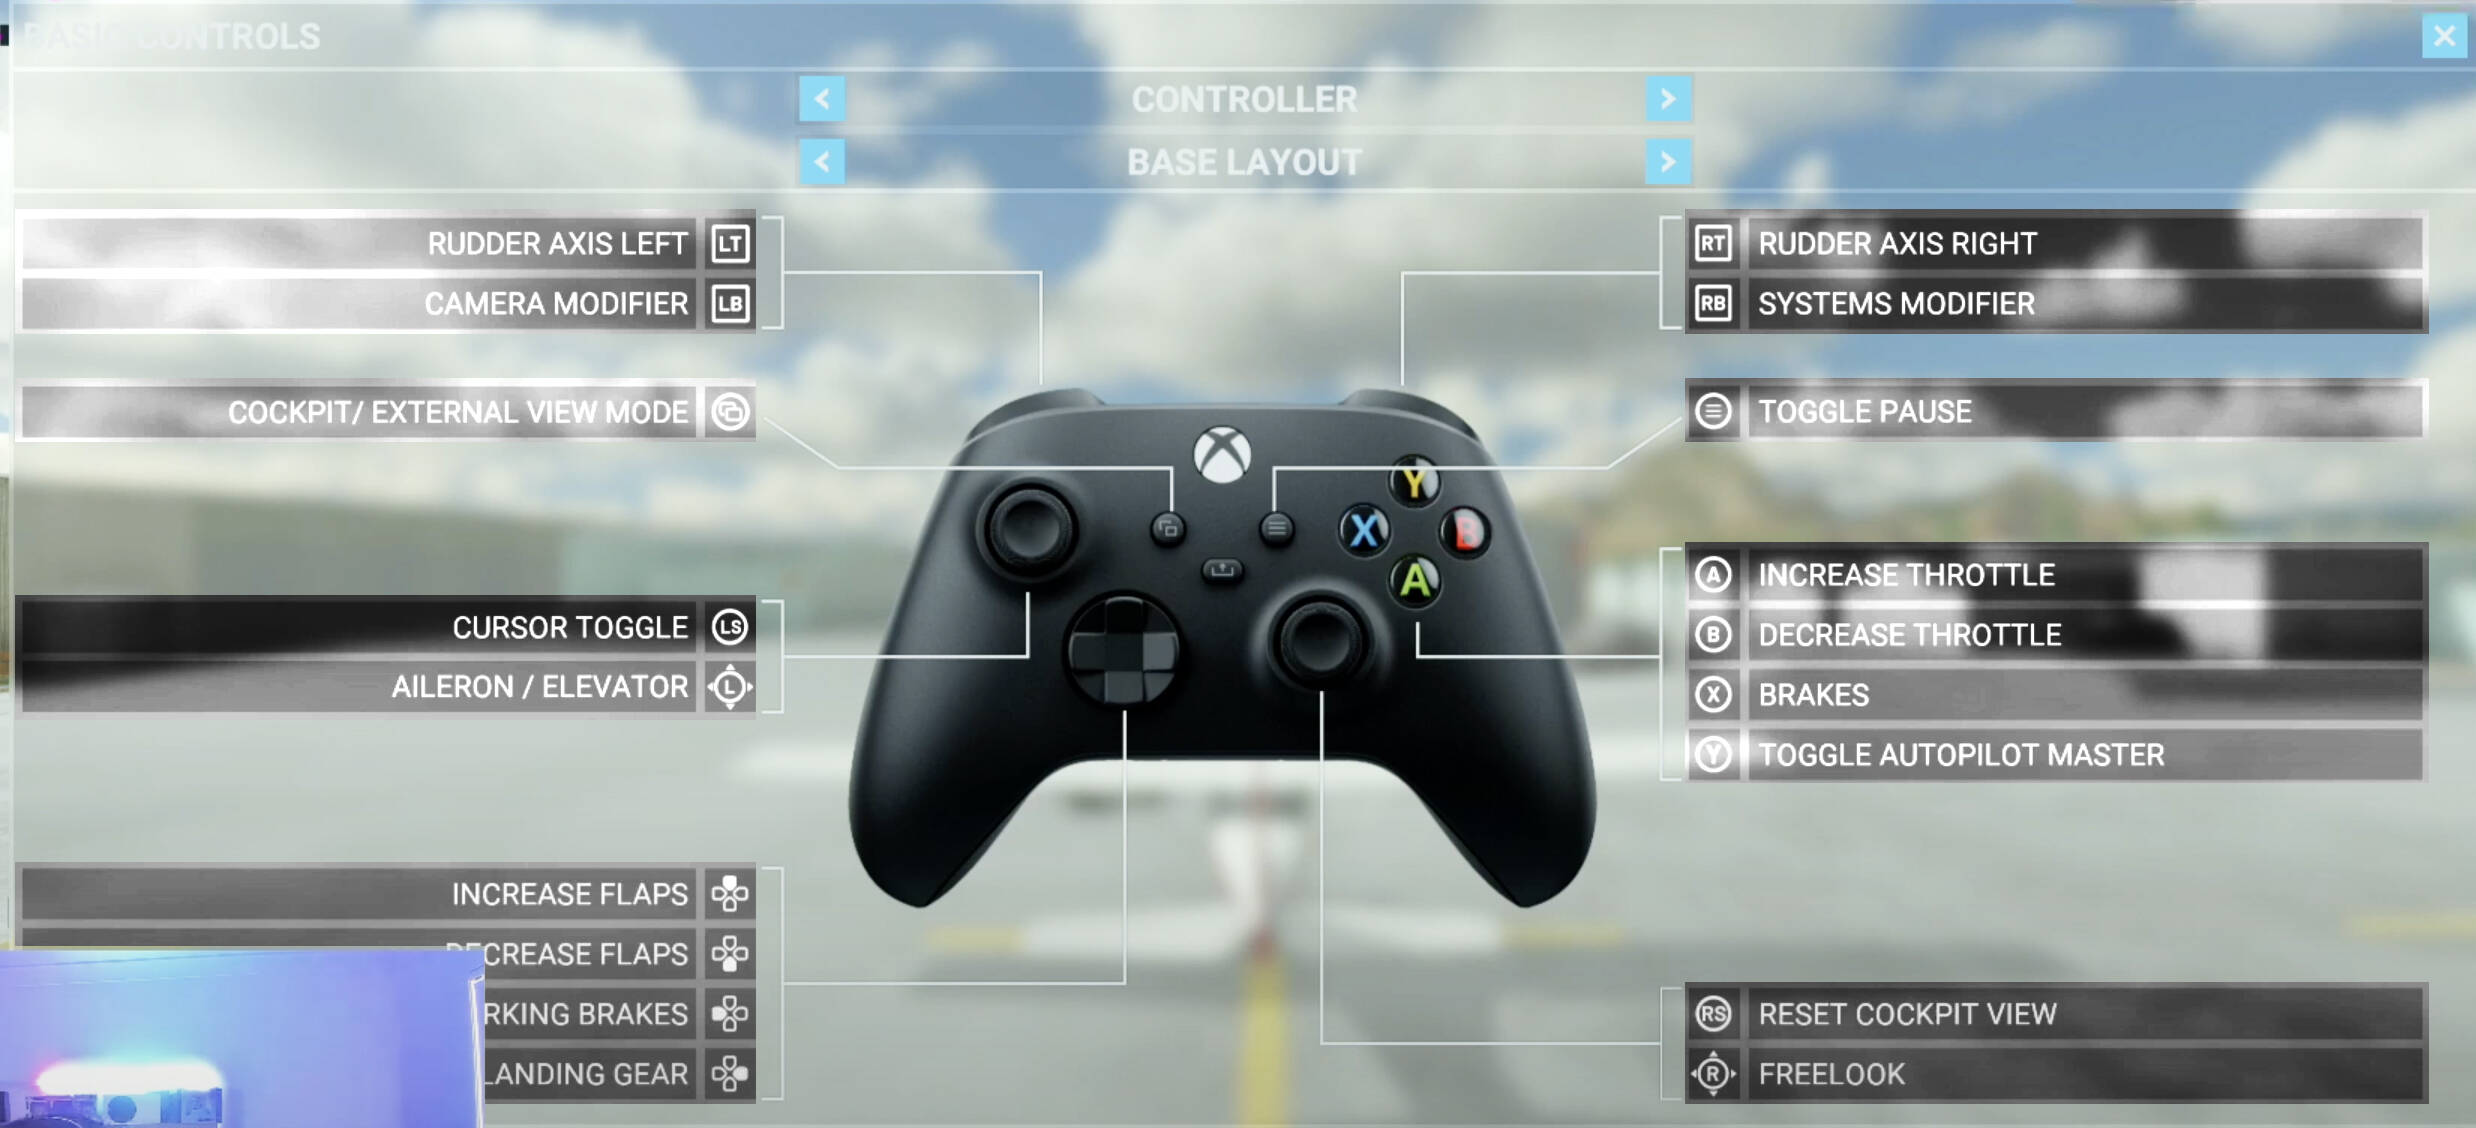 Xbox series x controller scheme map - General Discussion - Microsoft Flight  Simulator Forums